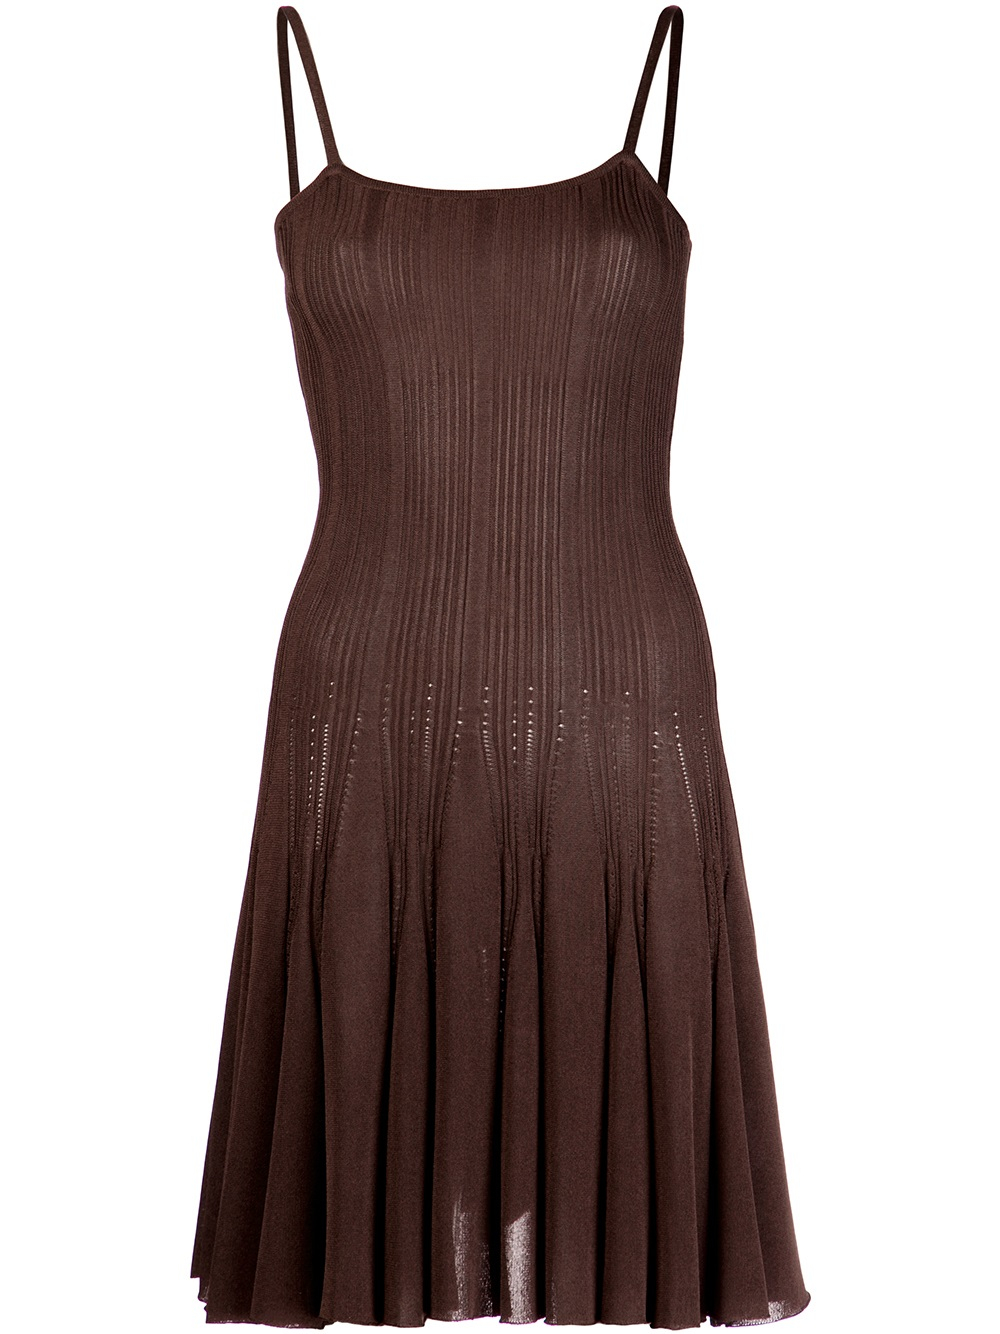 Lyst - Plein Sud Knit Dress in Brown